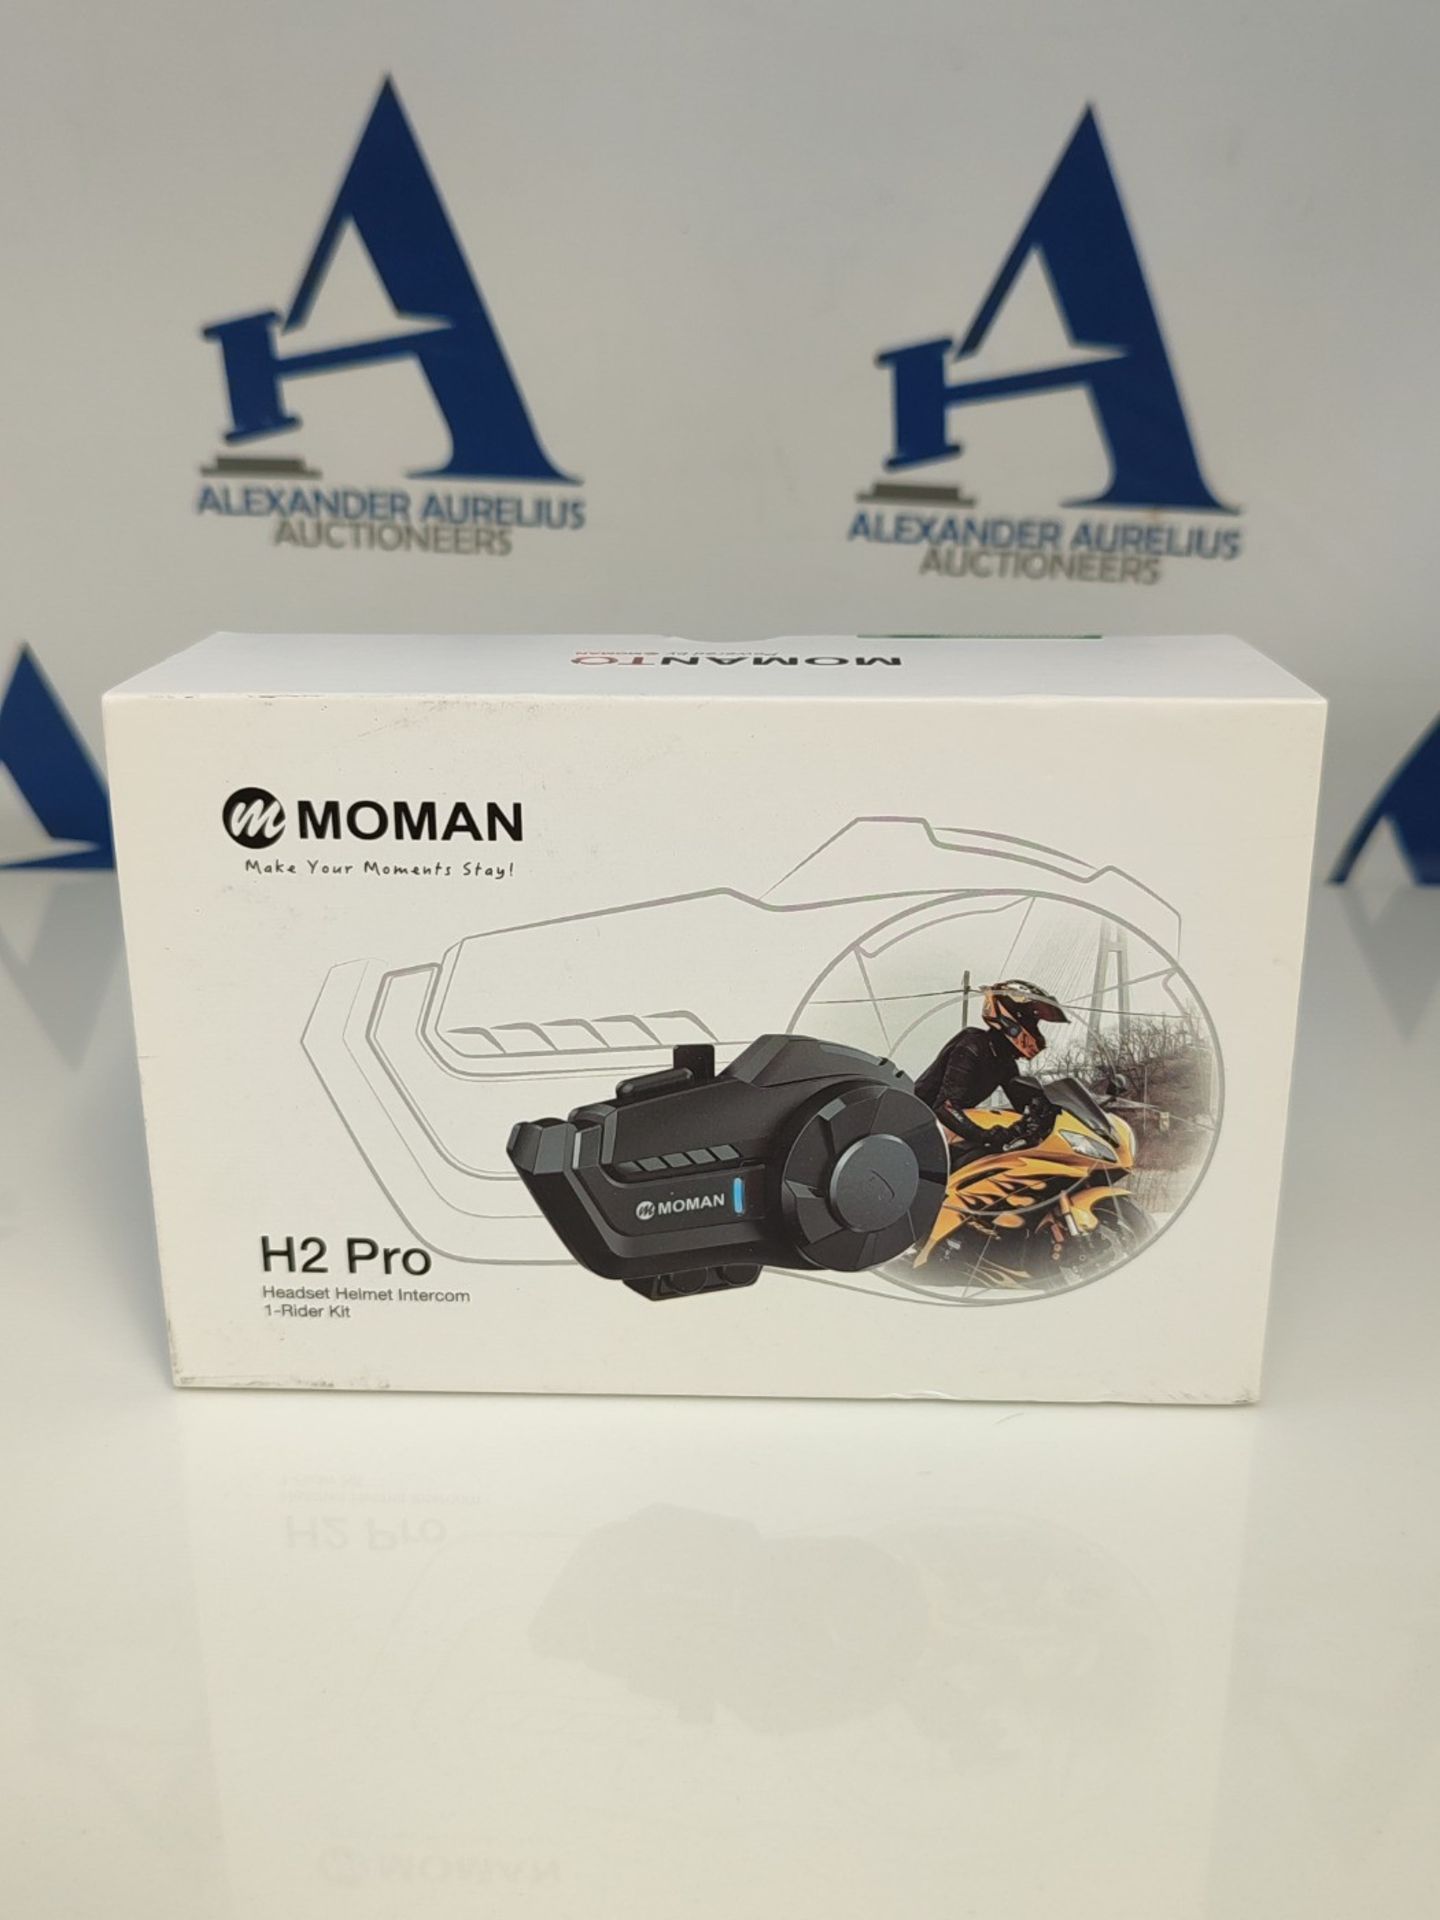 Moman Motorcycle Intercom Headset, H2 Pro01 Pack Camouflage0 Motorcycle Helmet Int